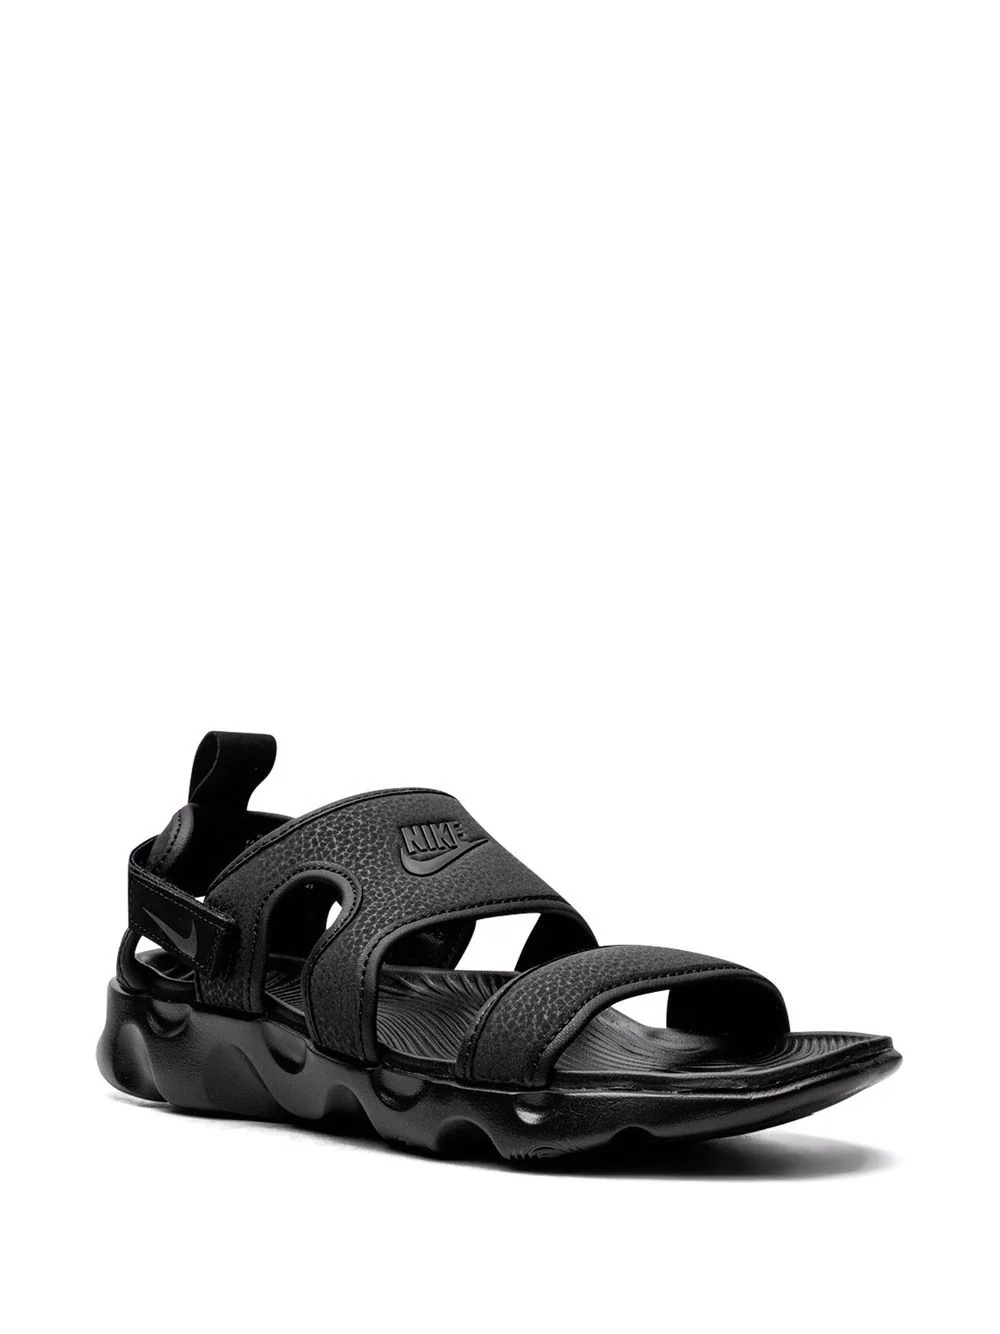 Owaysis sandals "Triple Black" - 2